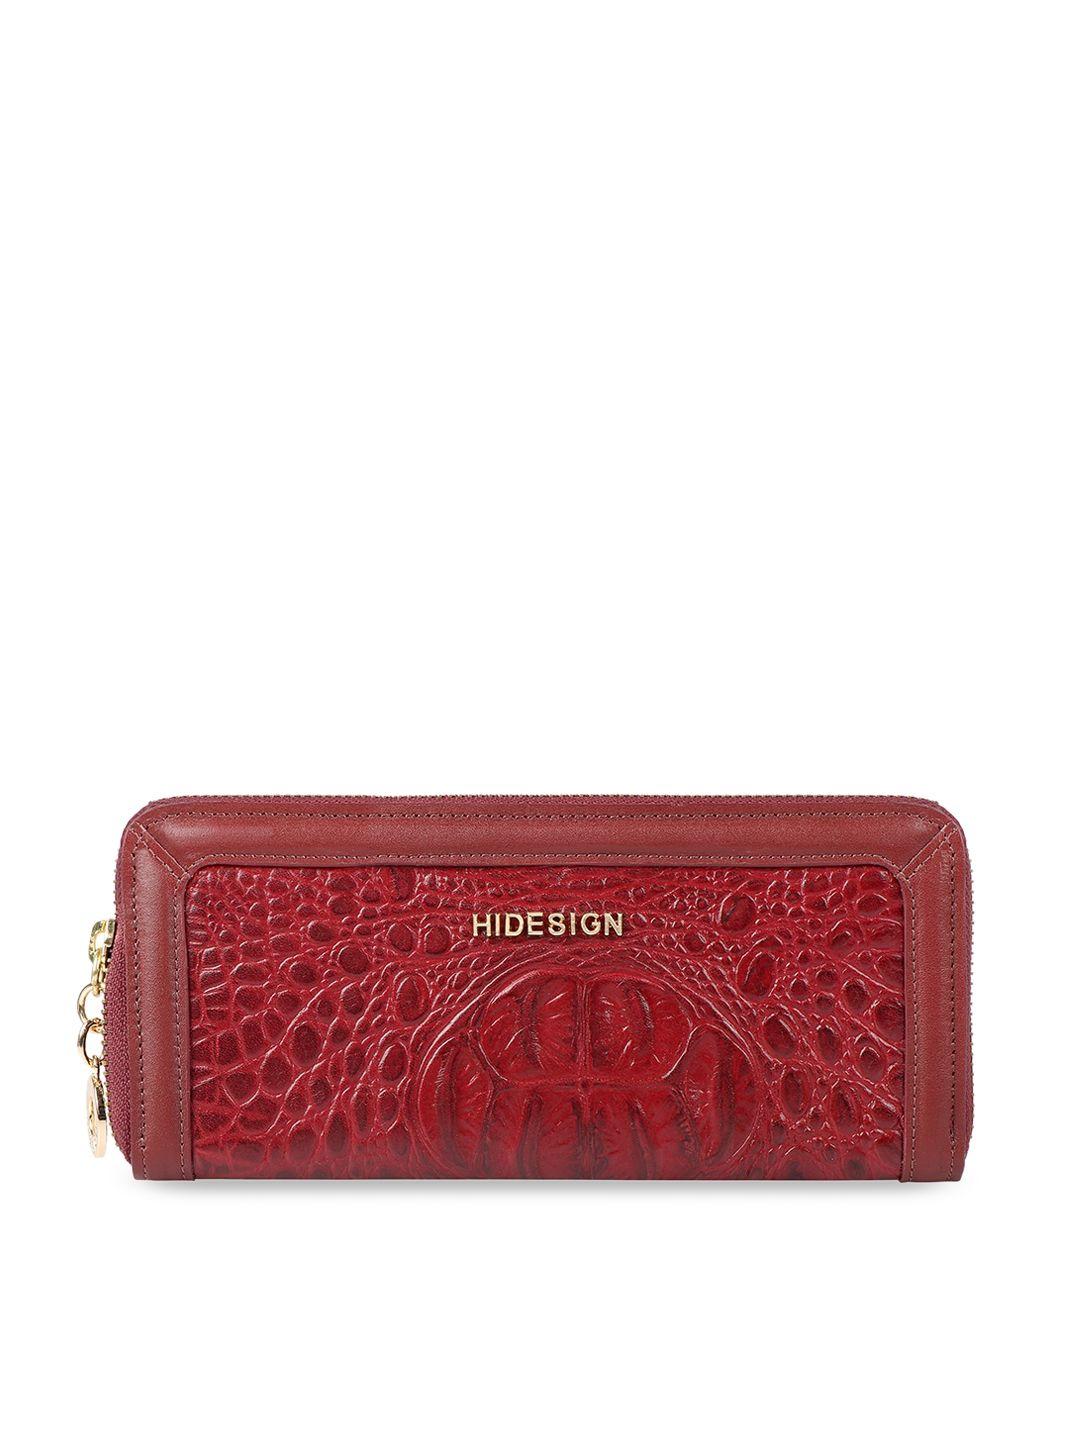 hidesign red textured purse clutch